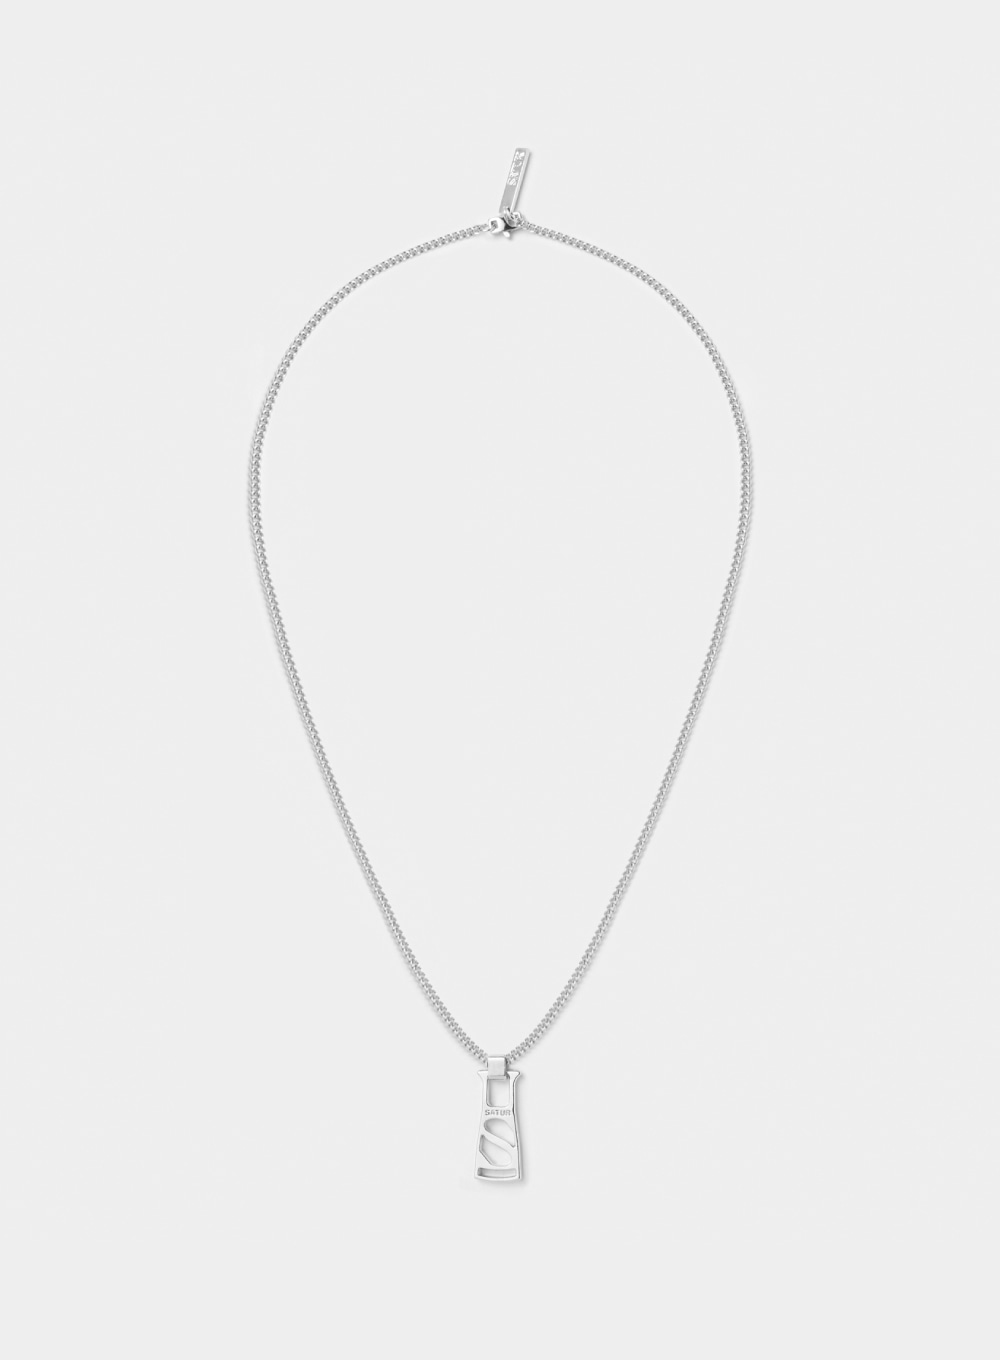 Satur Zipper Puller Pendant Necklace